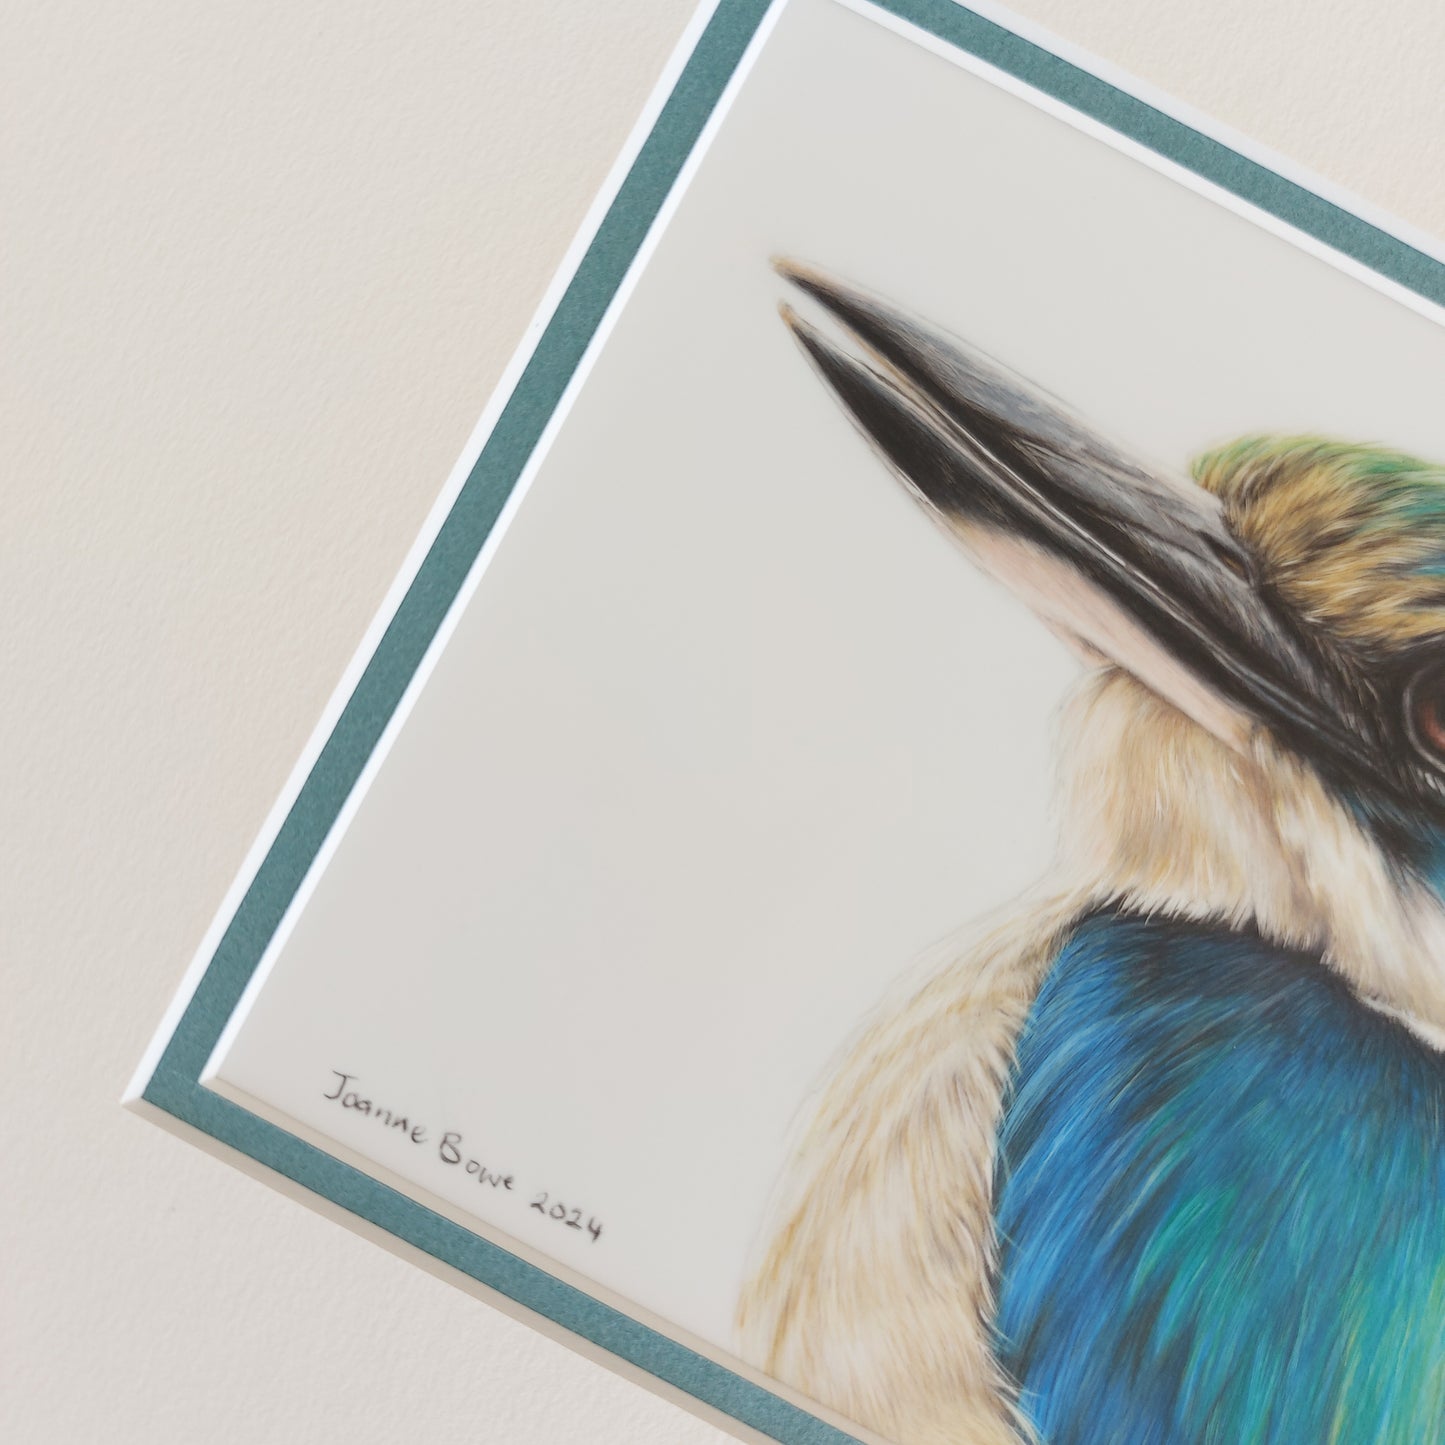 Colourful Kingfisher ORIGINAL - Joanne Bowe | New Zealand Artist